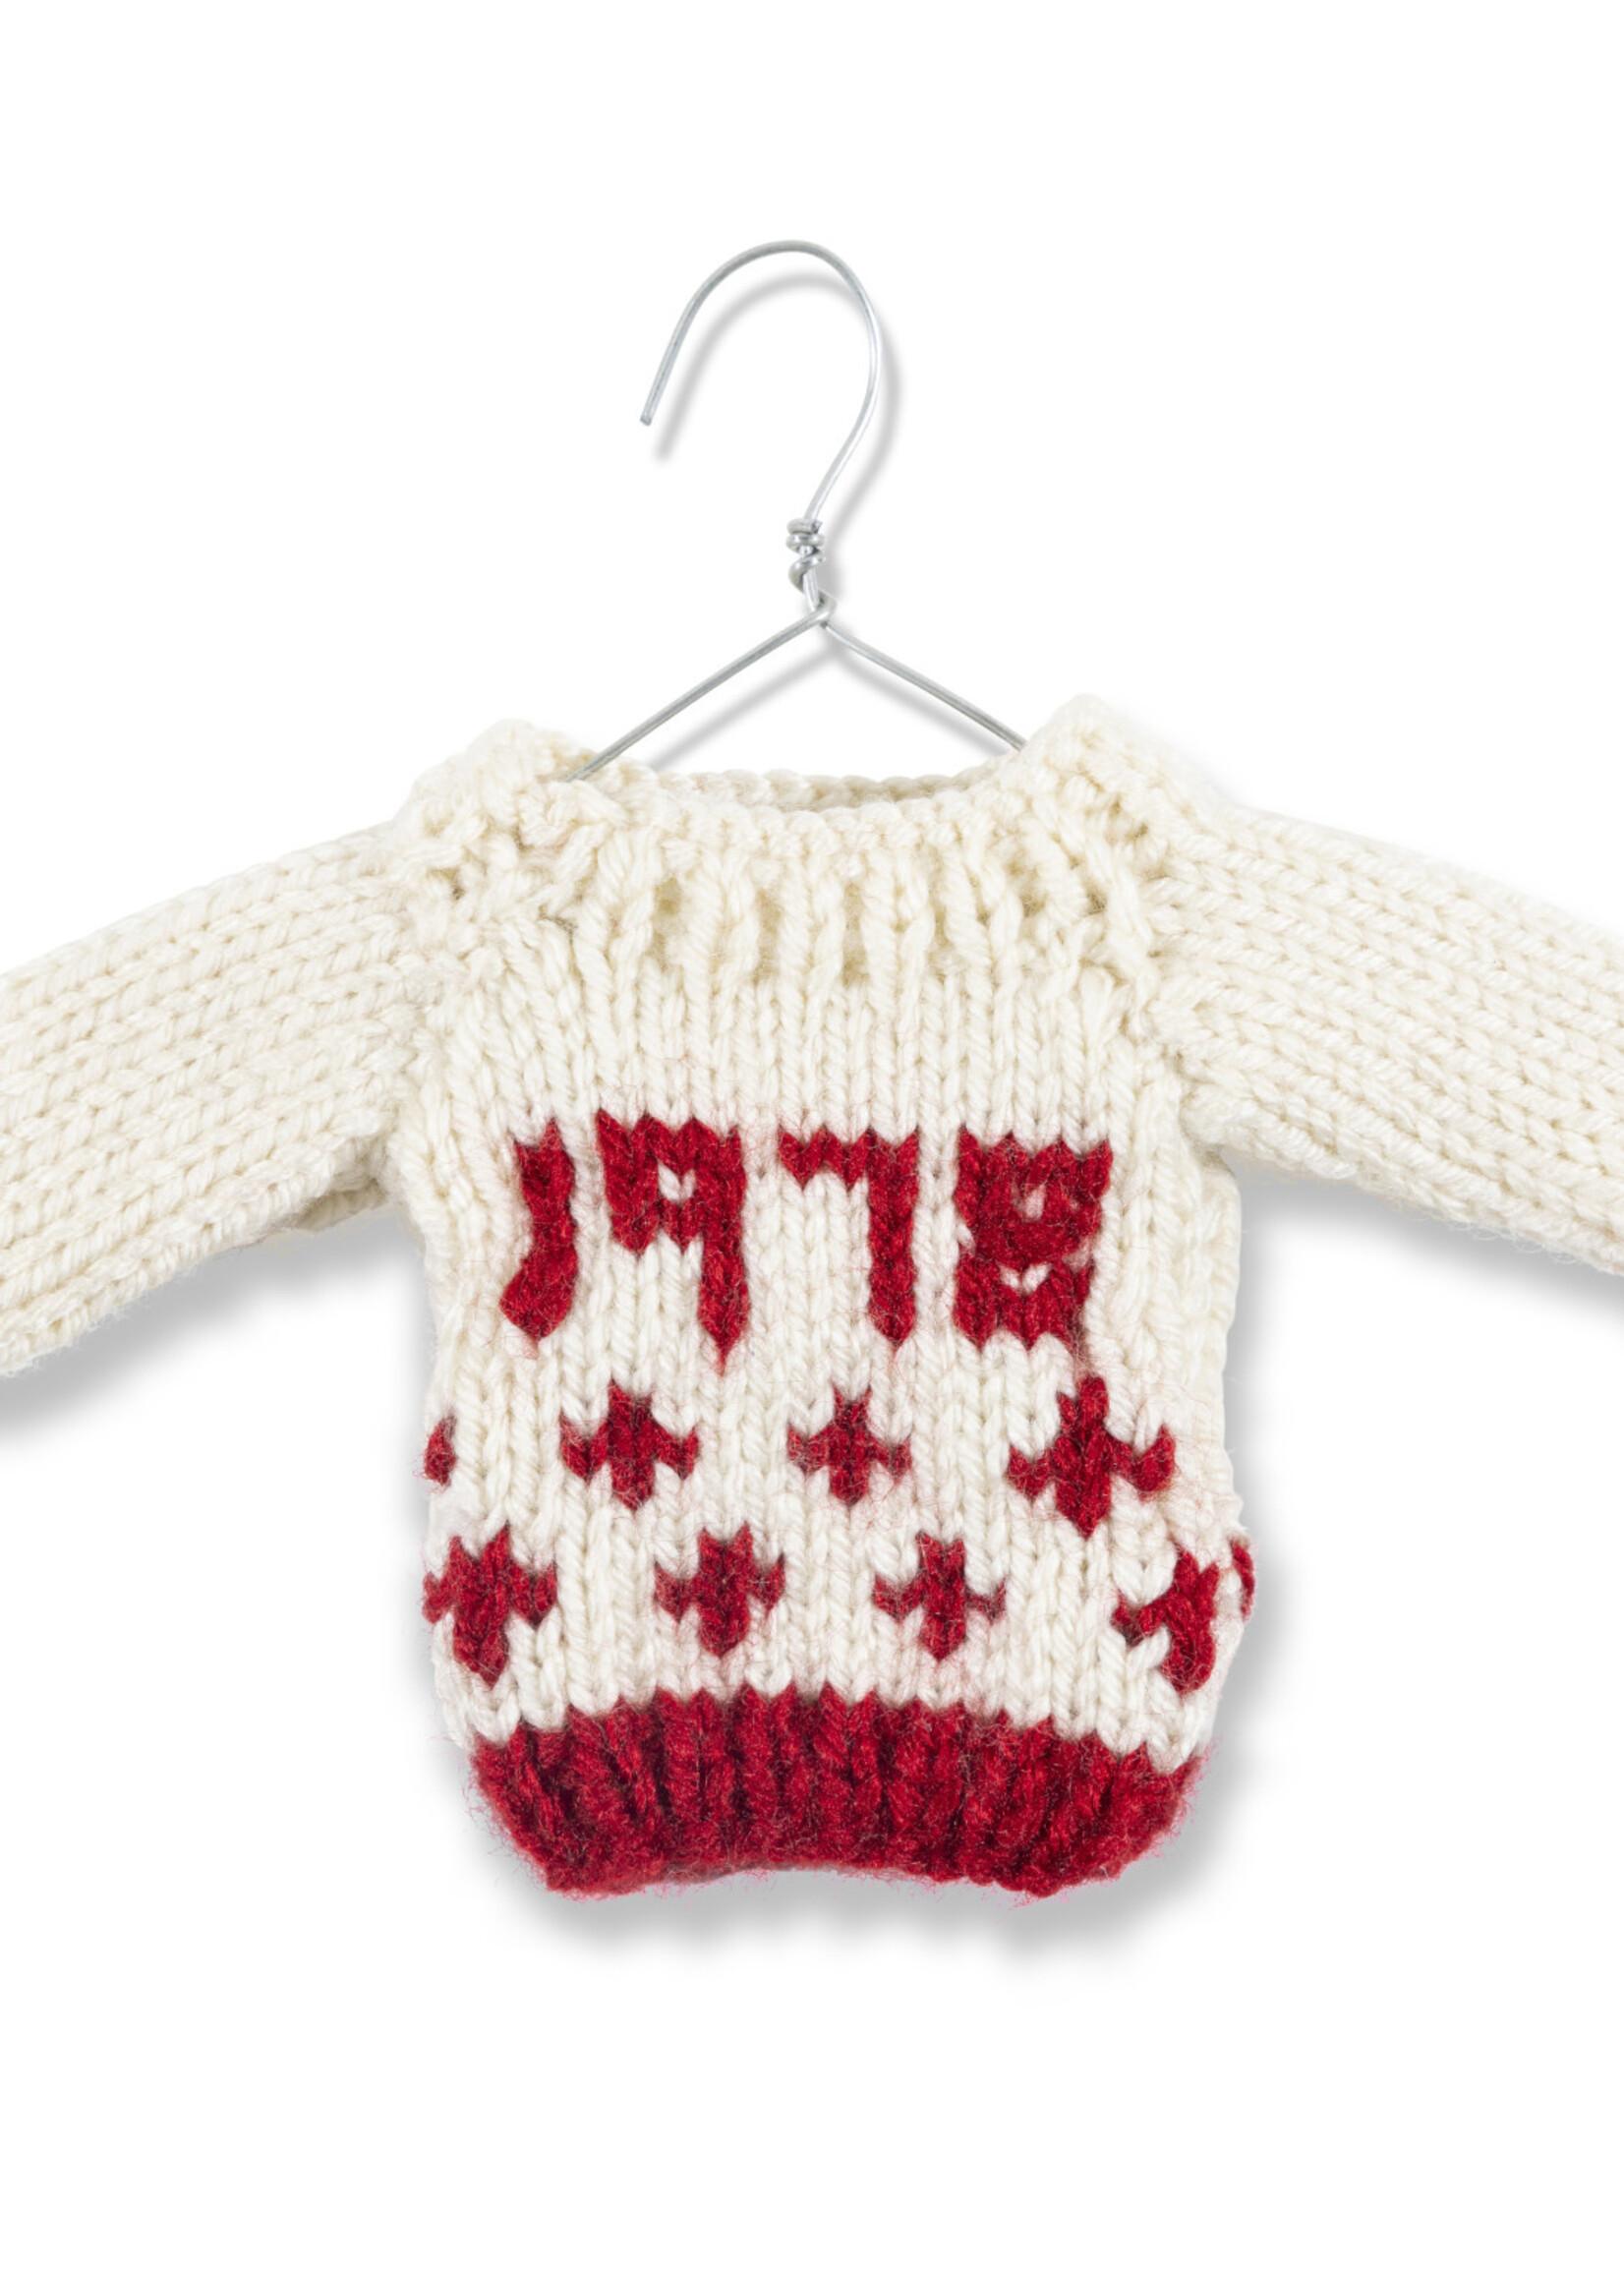 SCAD SCAD Mini Sweater Ornament